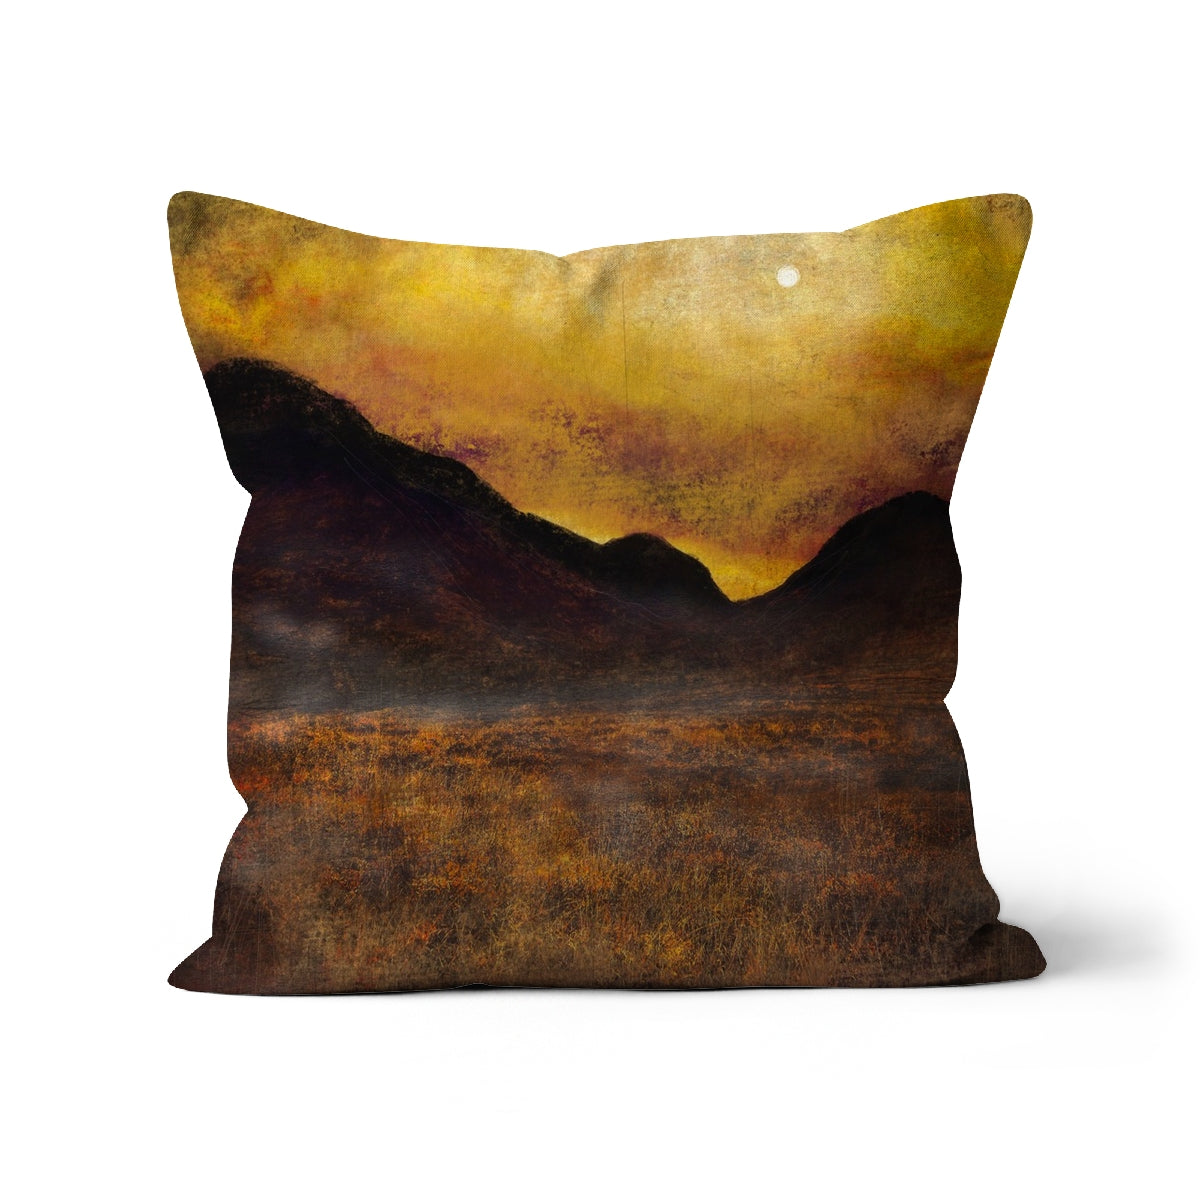 Glencoe Moonlight Art Gifts Cushion-Cushions-Glencoe Art Gallery-Linen-18"x18"-Paintings, Prints, Homeware, Art Gifts From Scotland By Scottish Artist Kevin Hunter